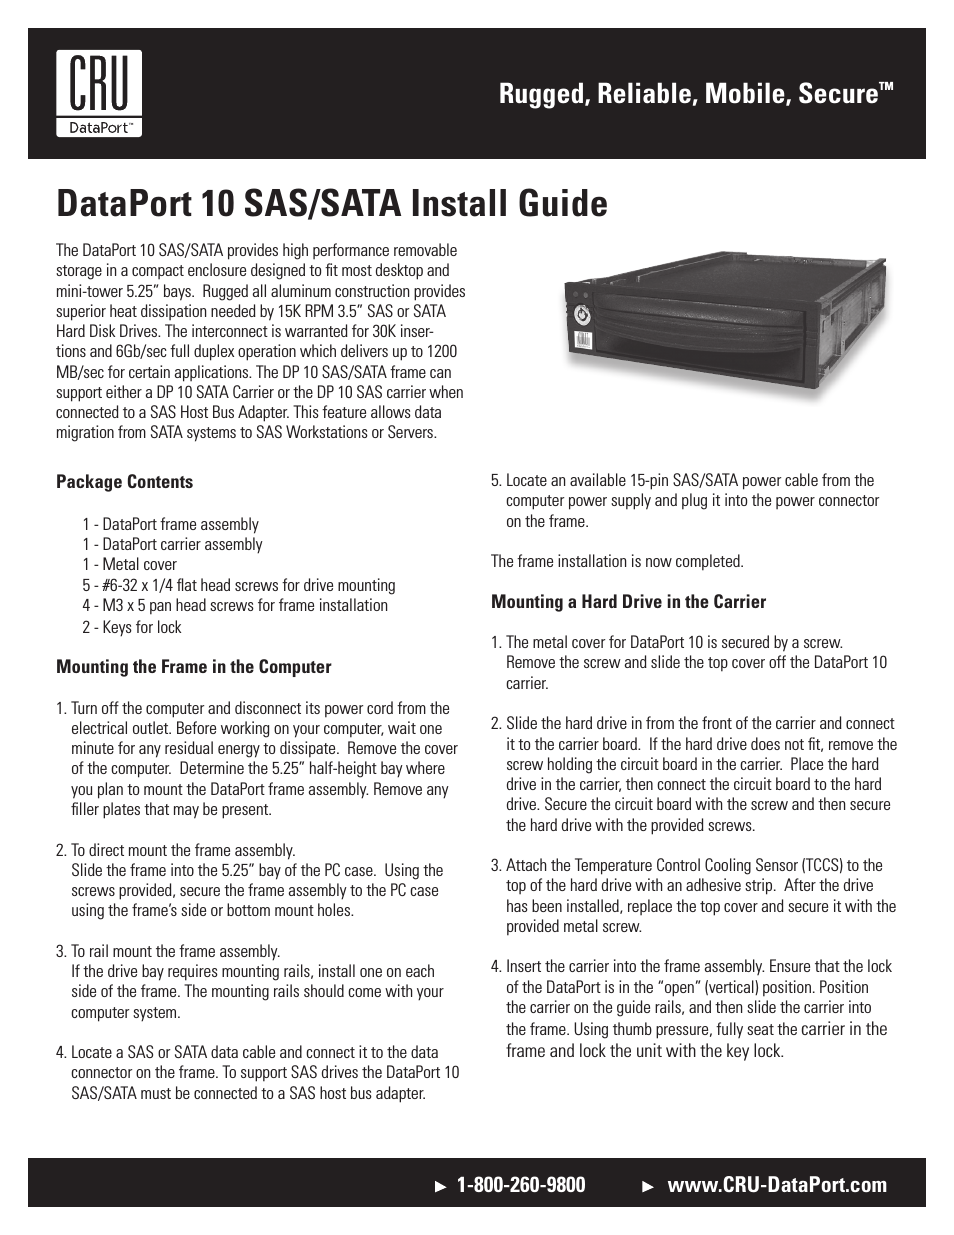 DataPort 10 SAS/SATA 6G